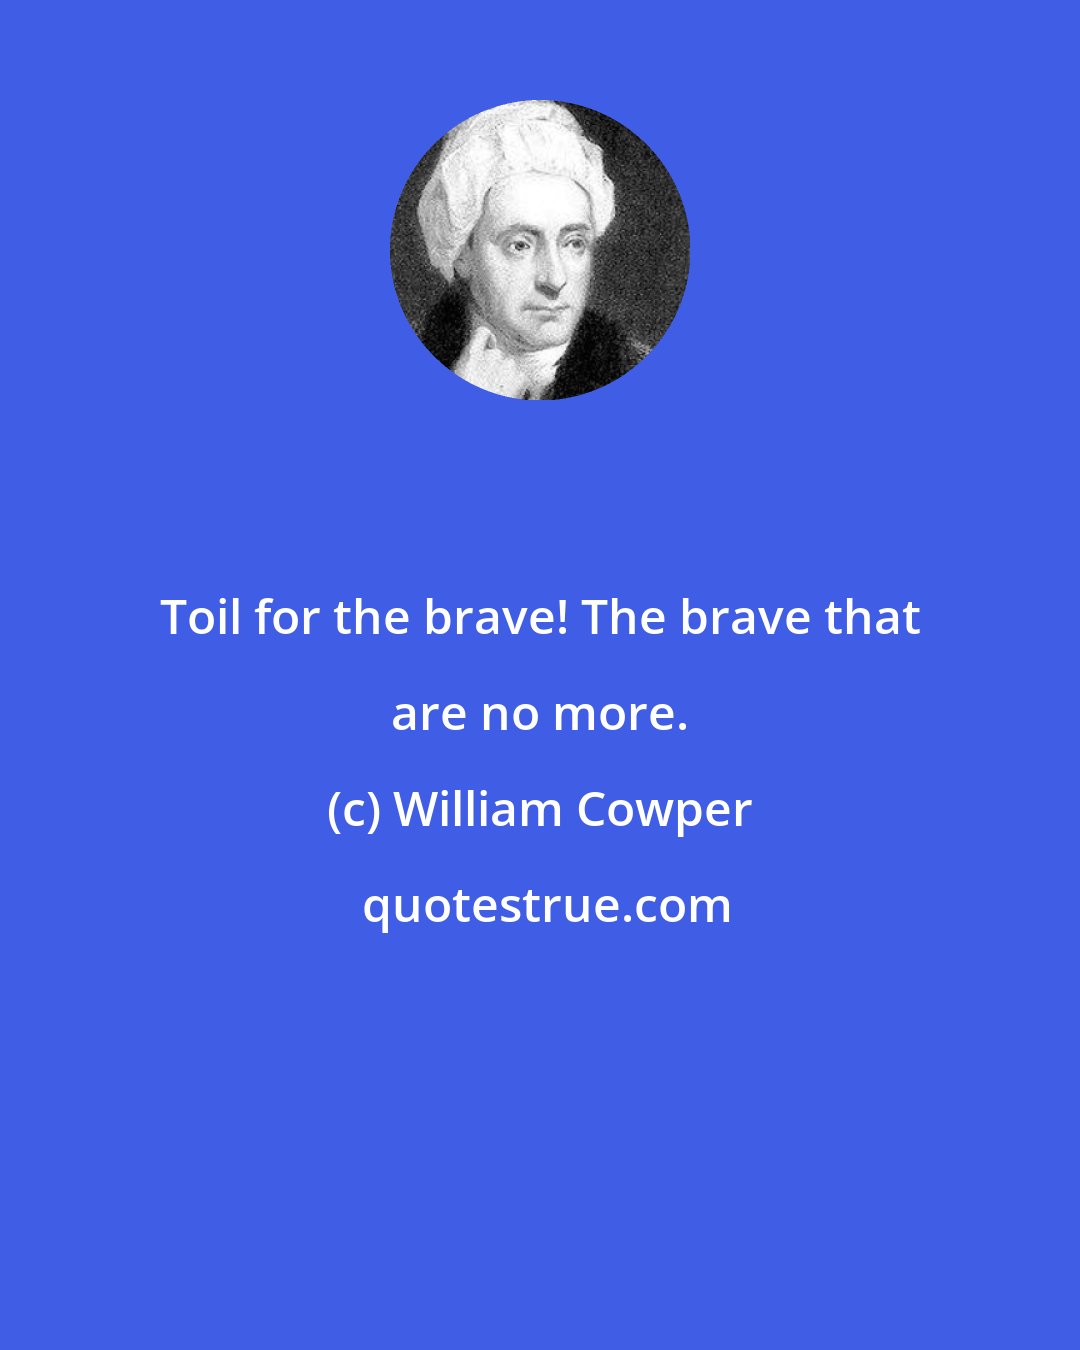 William Cowper: Toil for the brave! The brave that are no more.